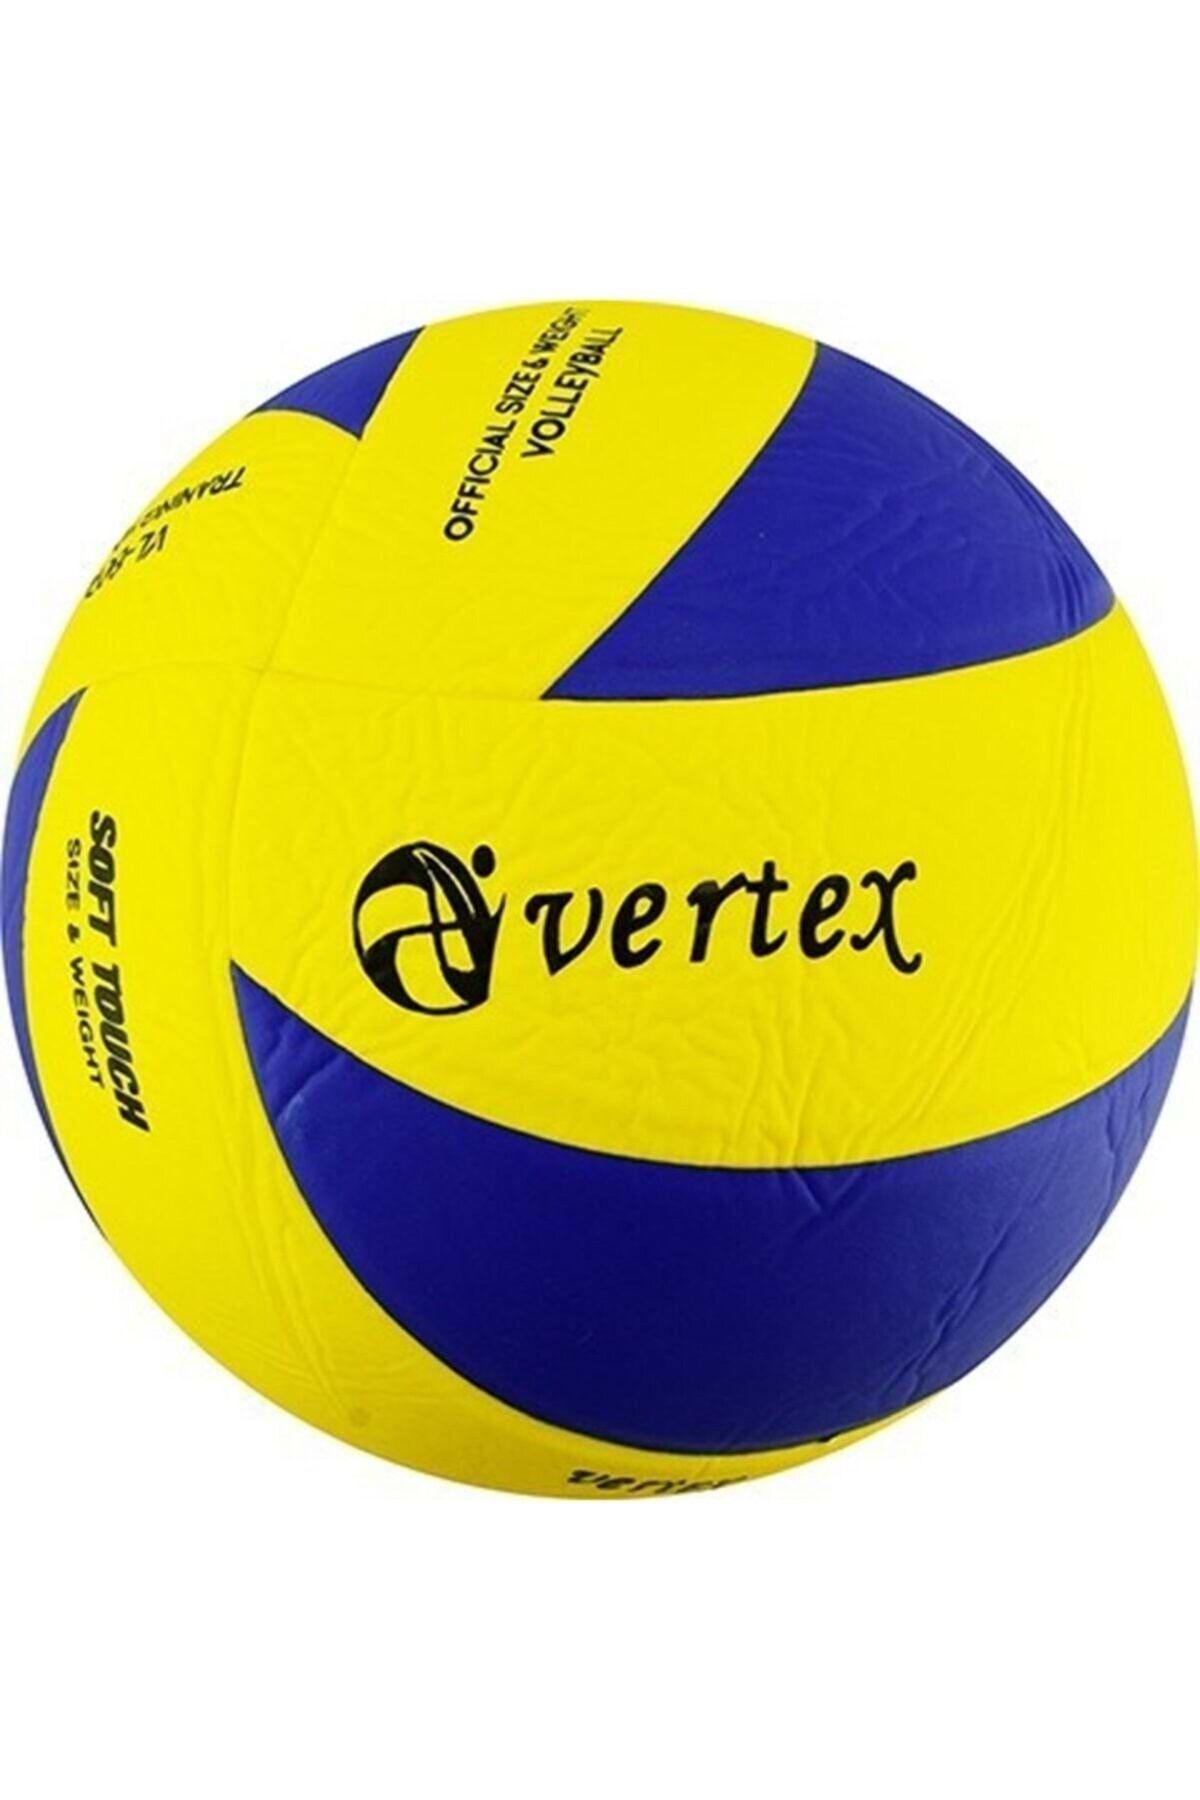 Vertex Vl-800 Soft Yapıştırma 5 No Voleybol Topu Sarı